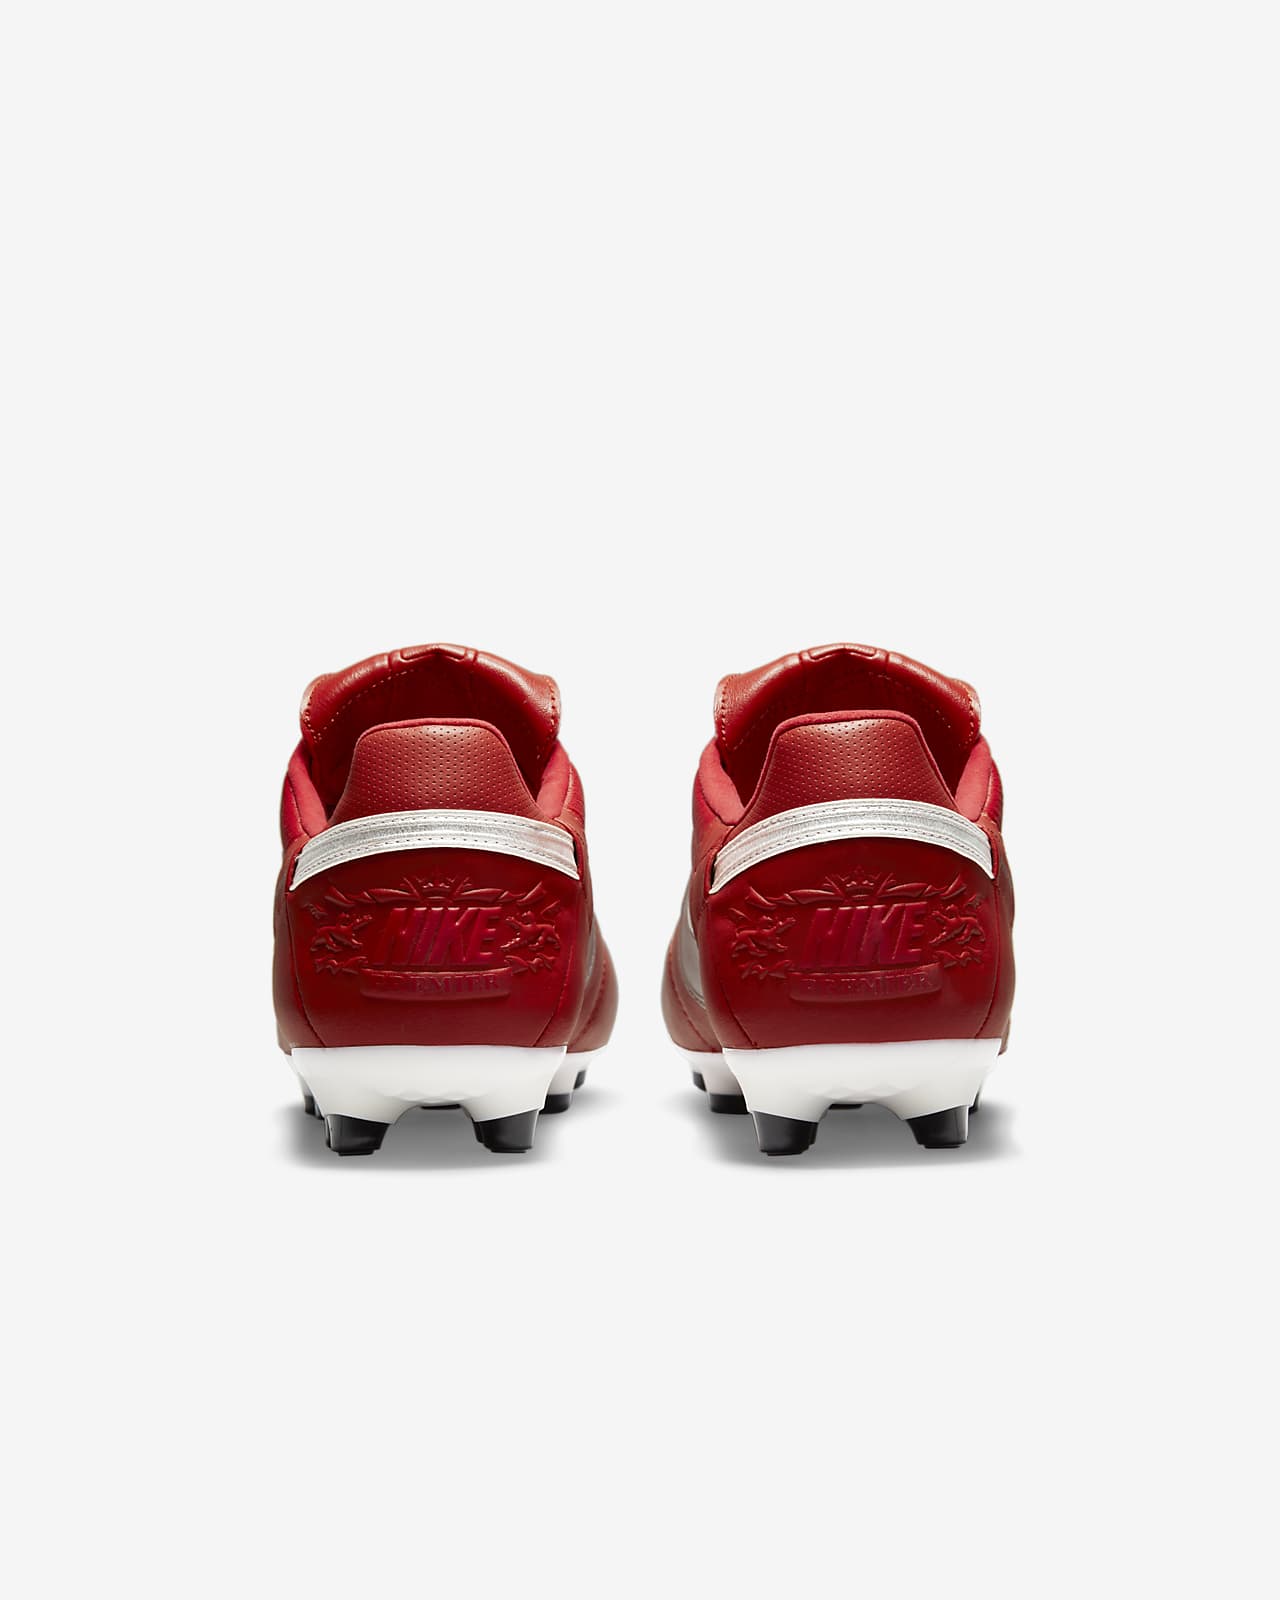 limpiador Emular Registro The Nike Premier 3 FG Firm-Ground Football Boots. Nike GB